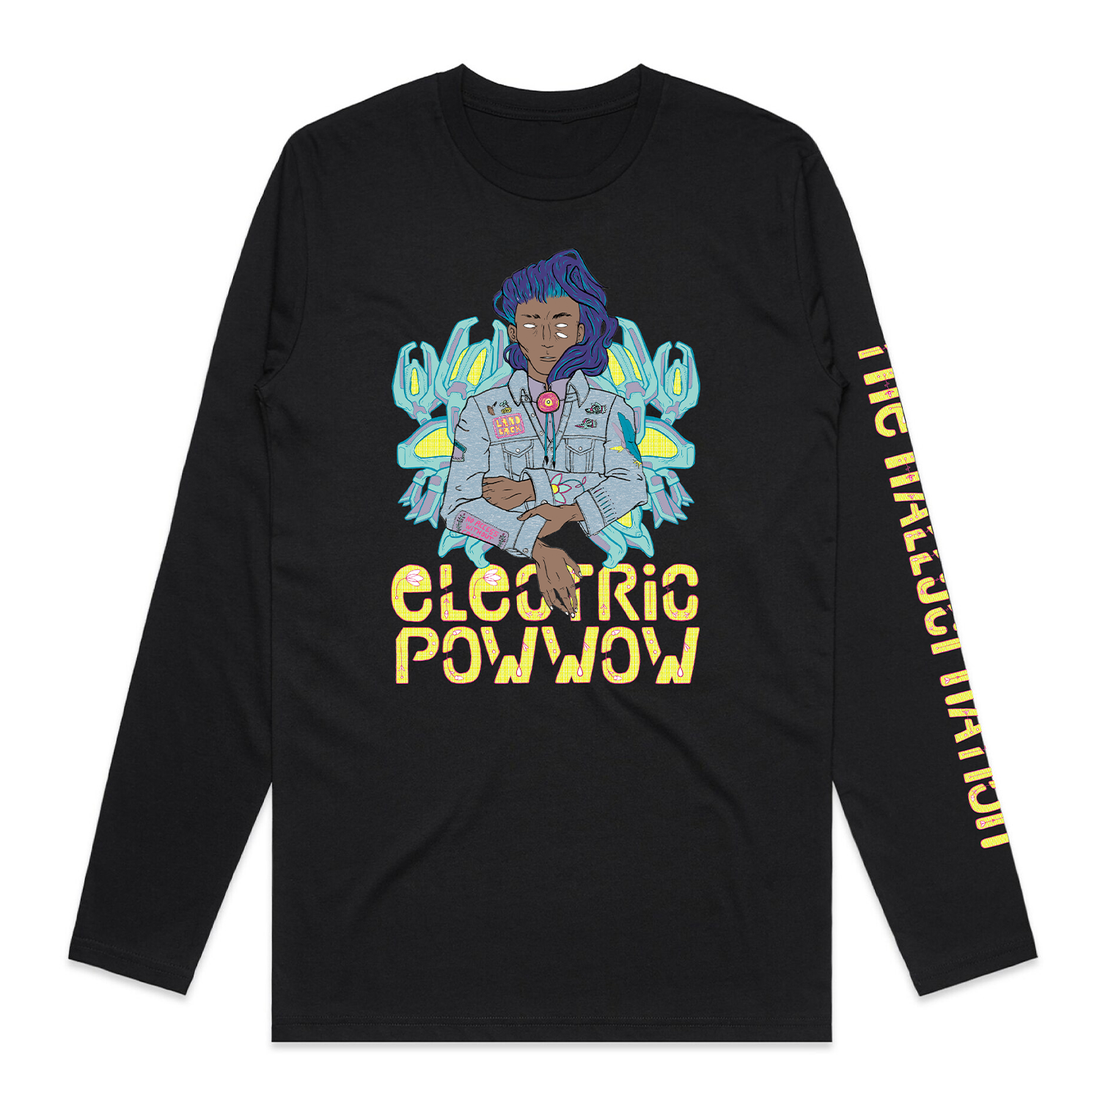 The Halluci Nation - Electric Pow Wow Long Sleeve Shirt - Black